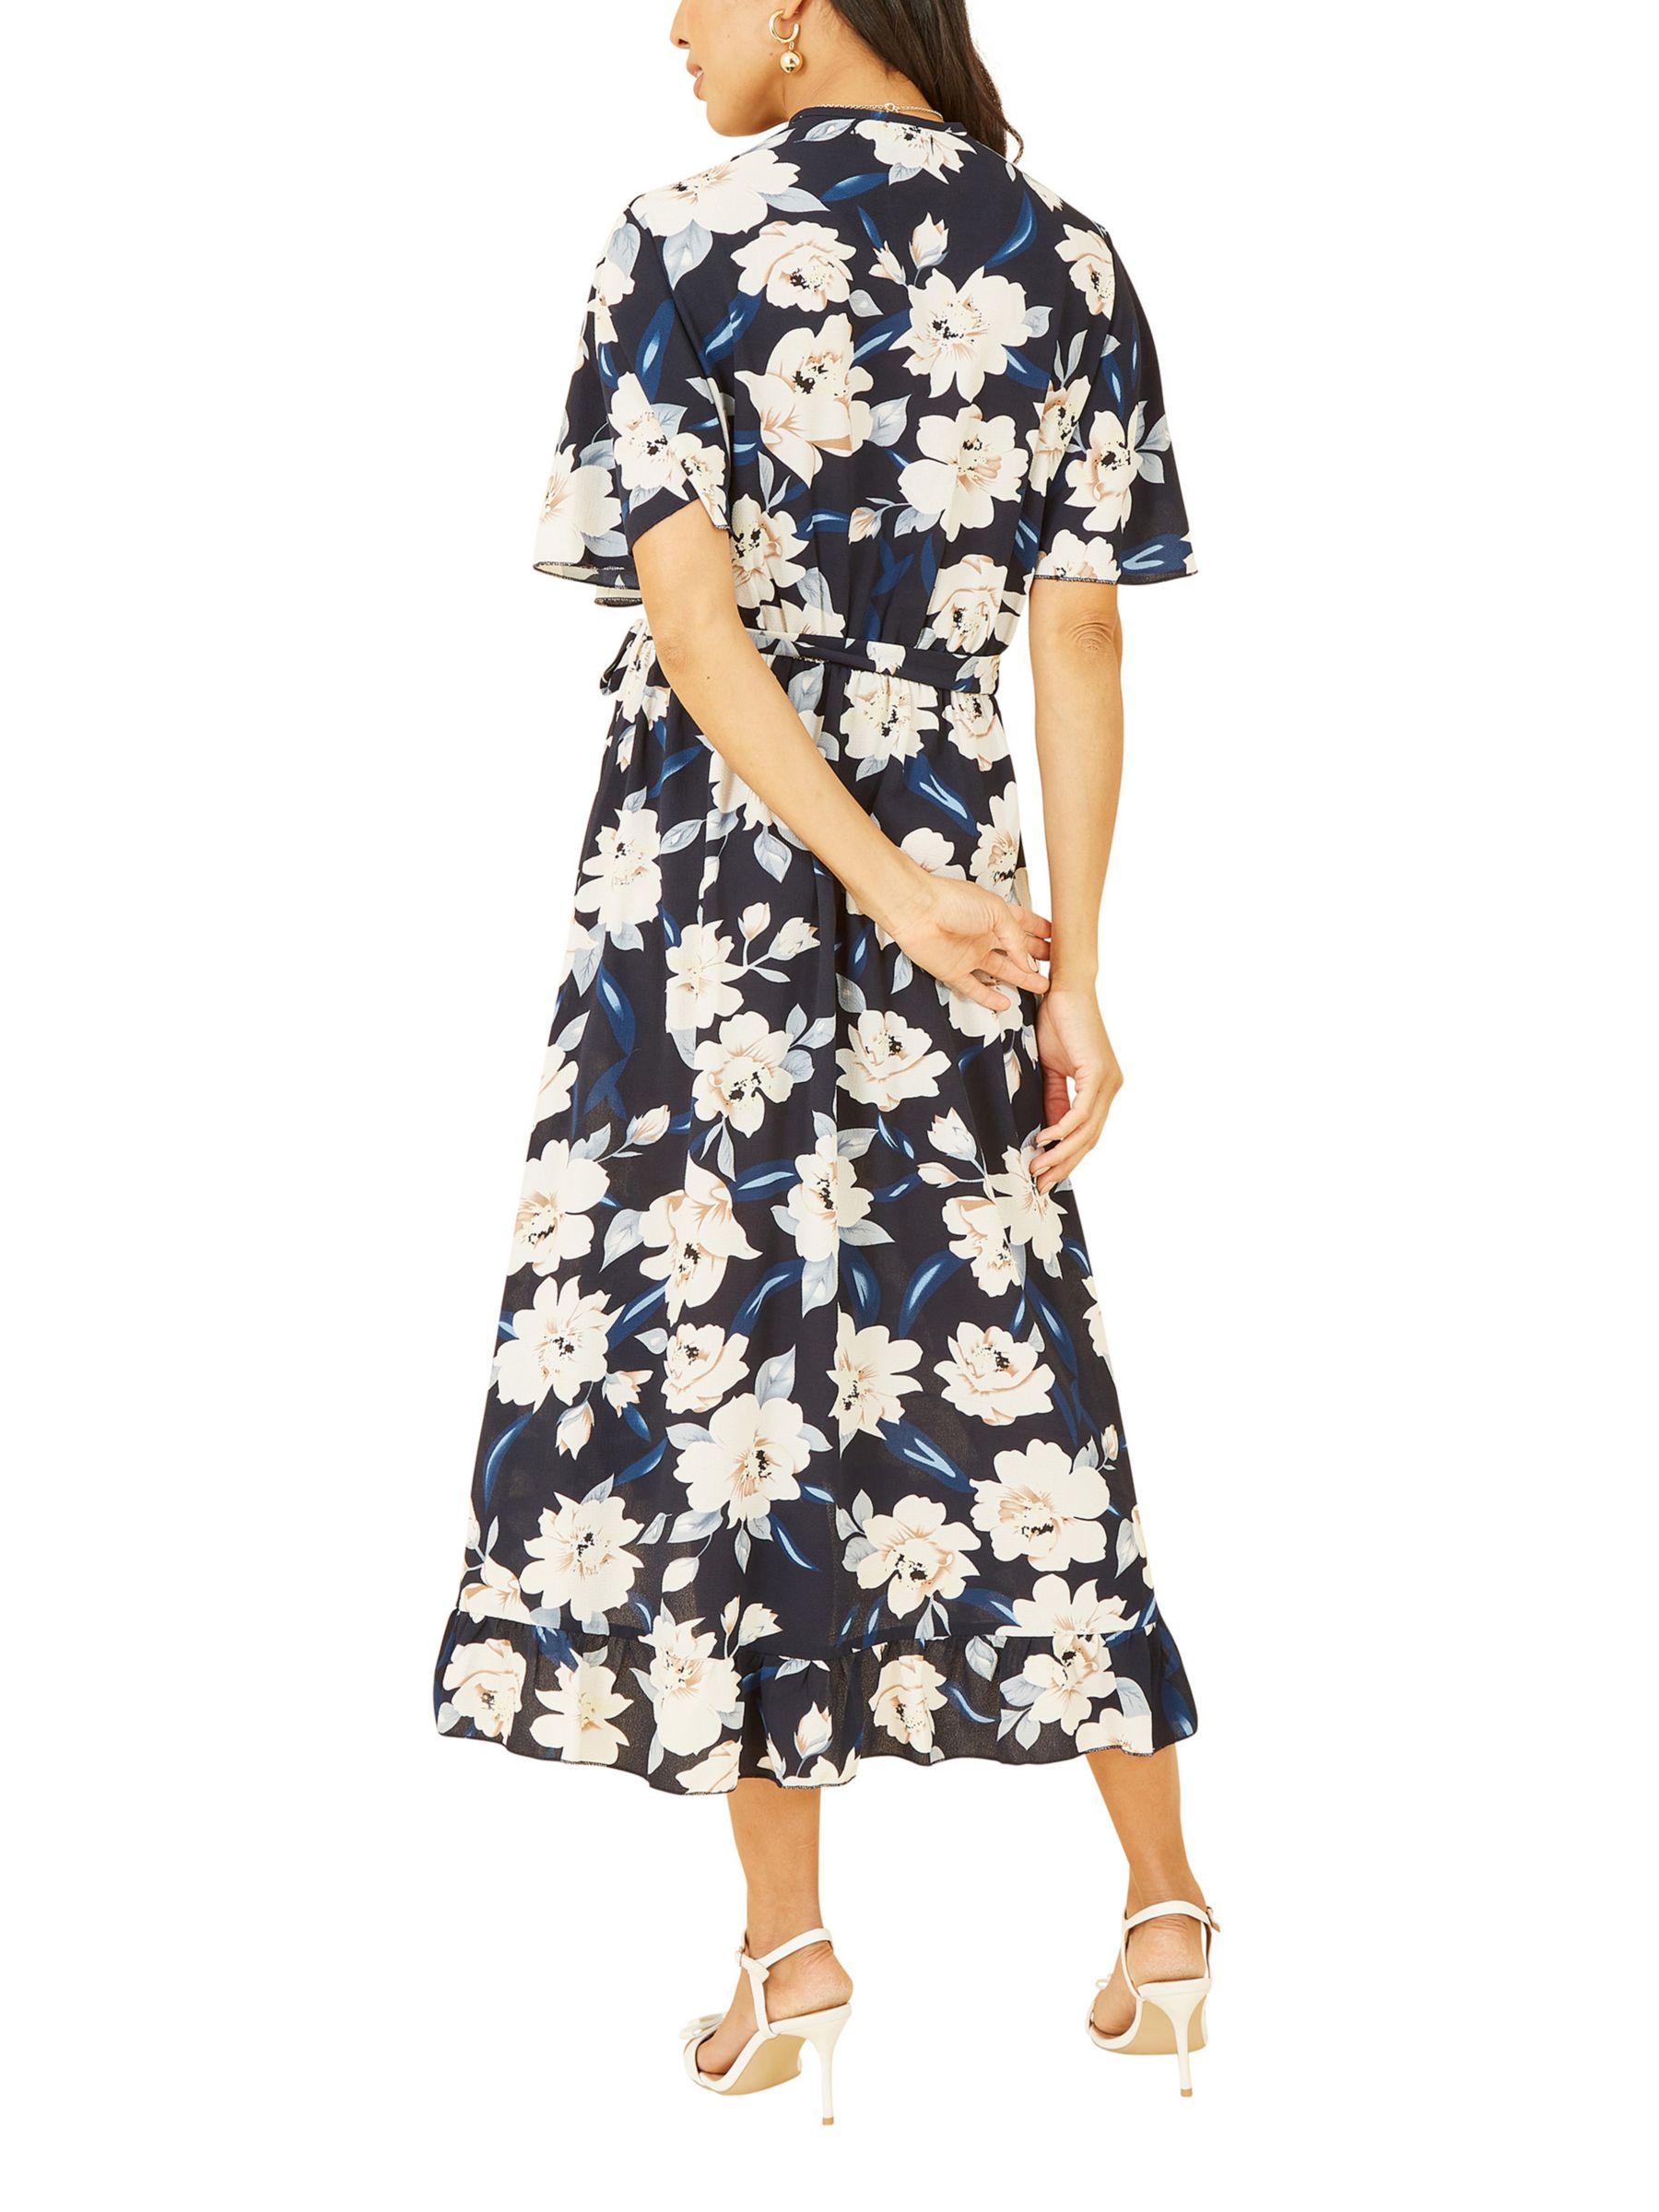 Mela London Floral Print Wrap Midi Dress, Navy, 8